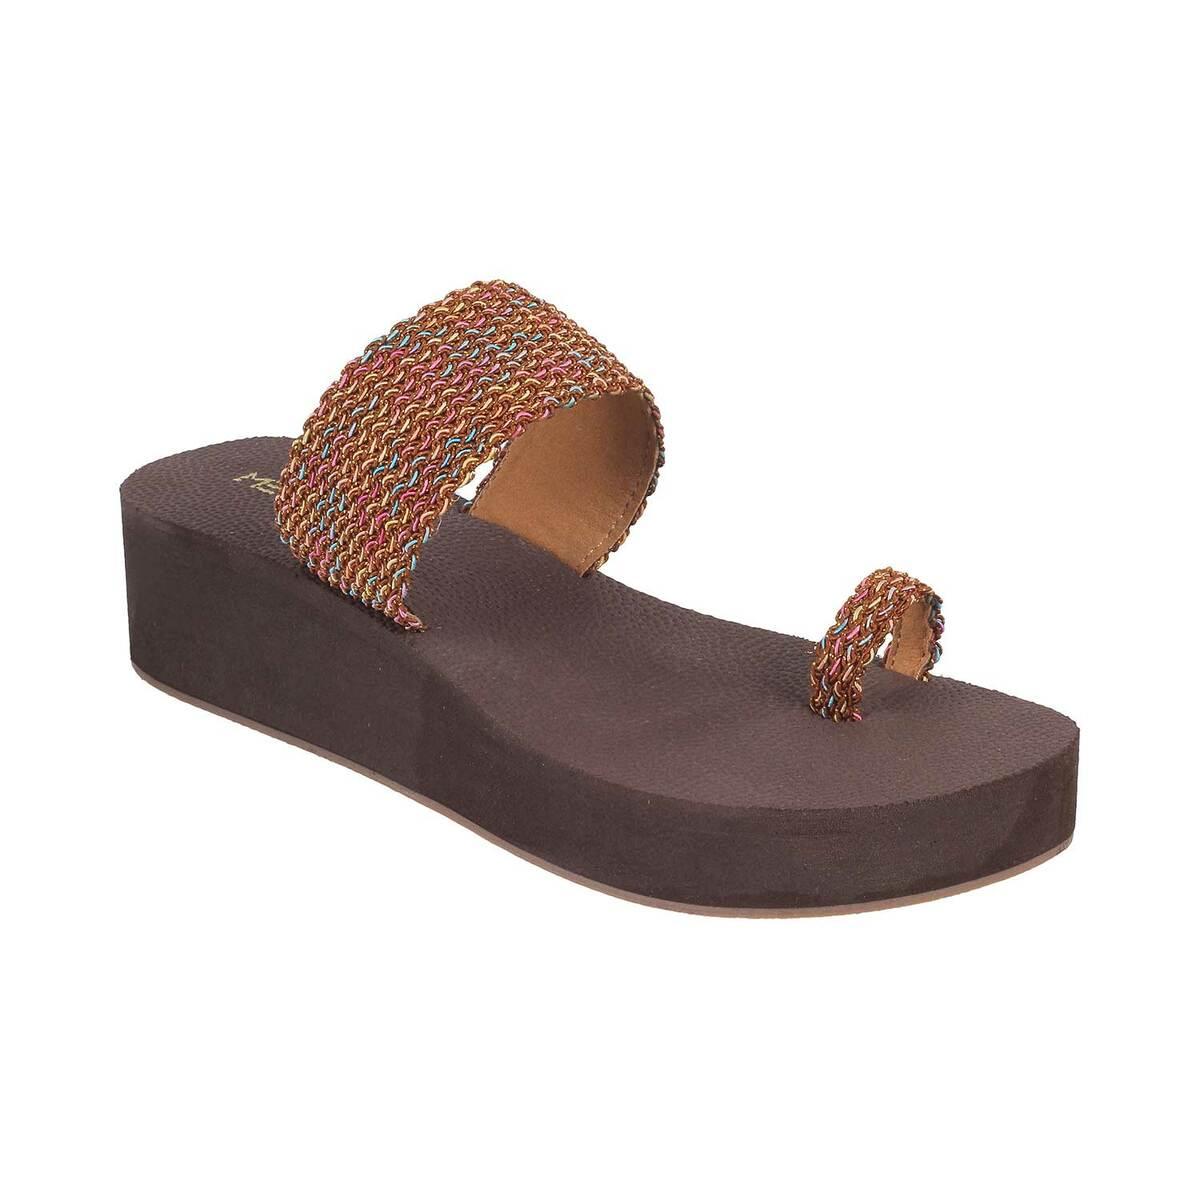 Buy Men Black Casual Sandals Online | SKU: 60-925-11-40-Metro Shoes